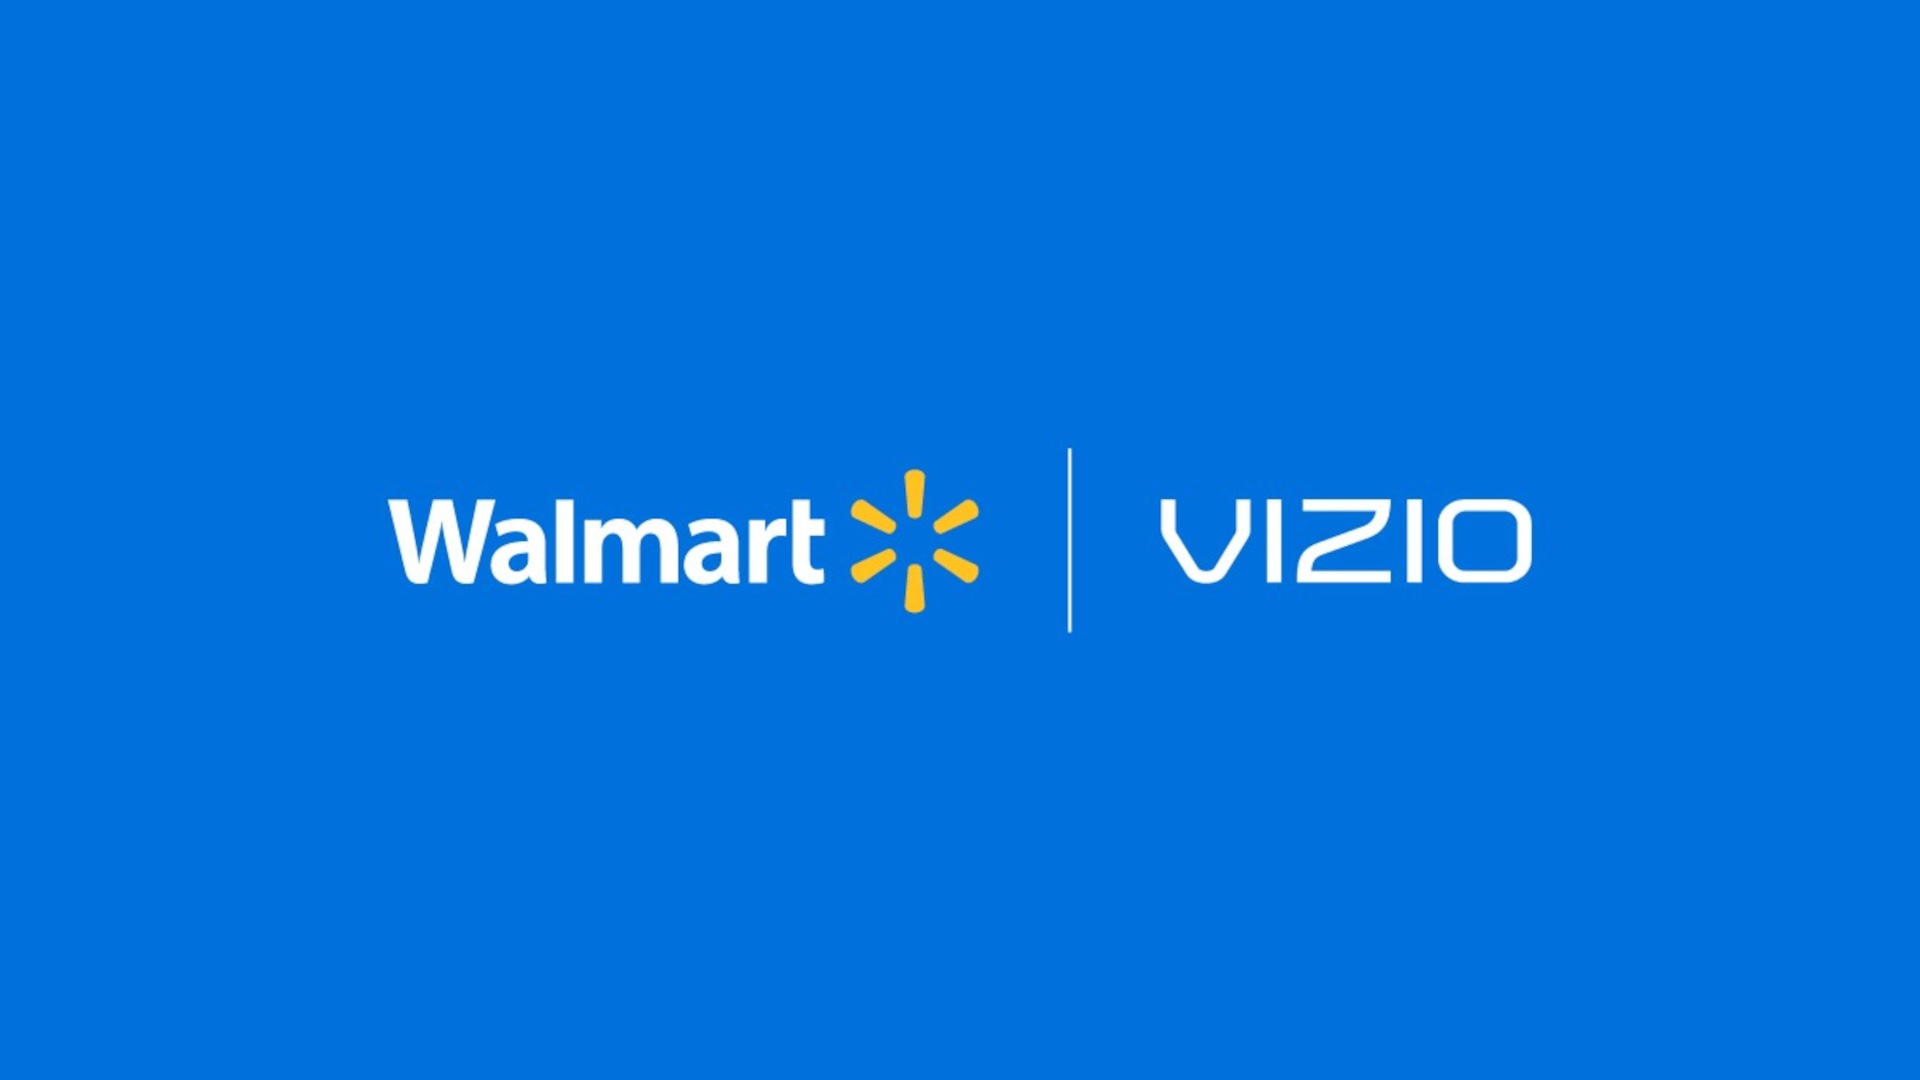 Walmart acquires Vizio to expand media sales business (Photo: Walmart)